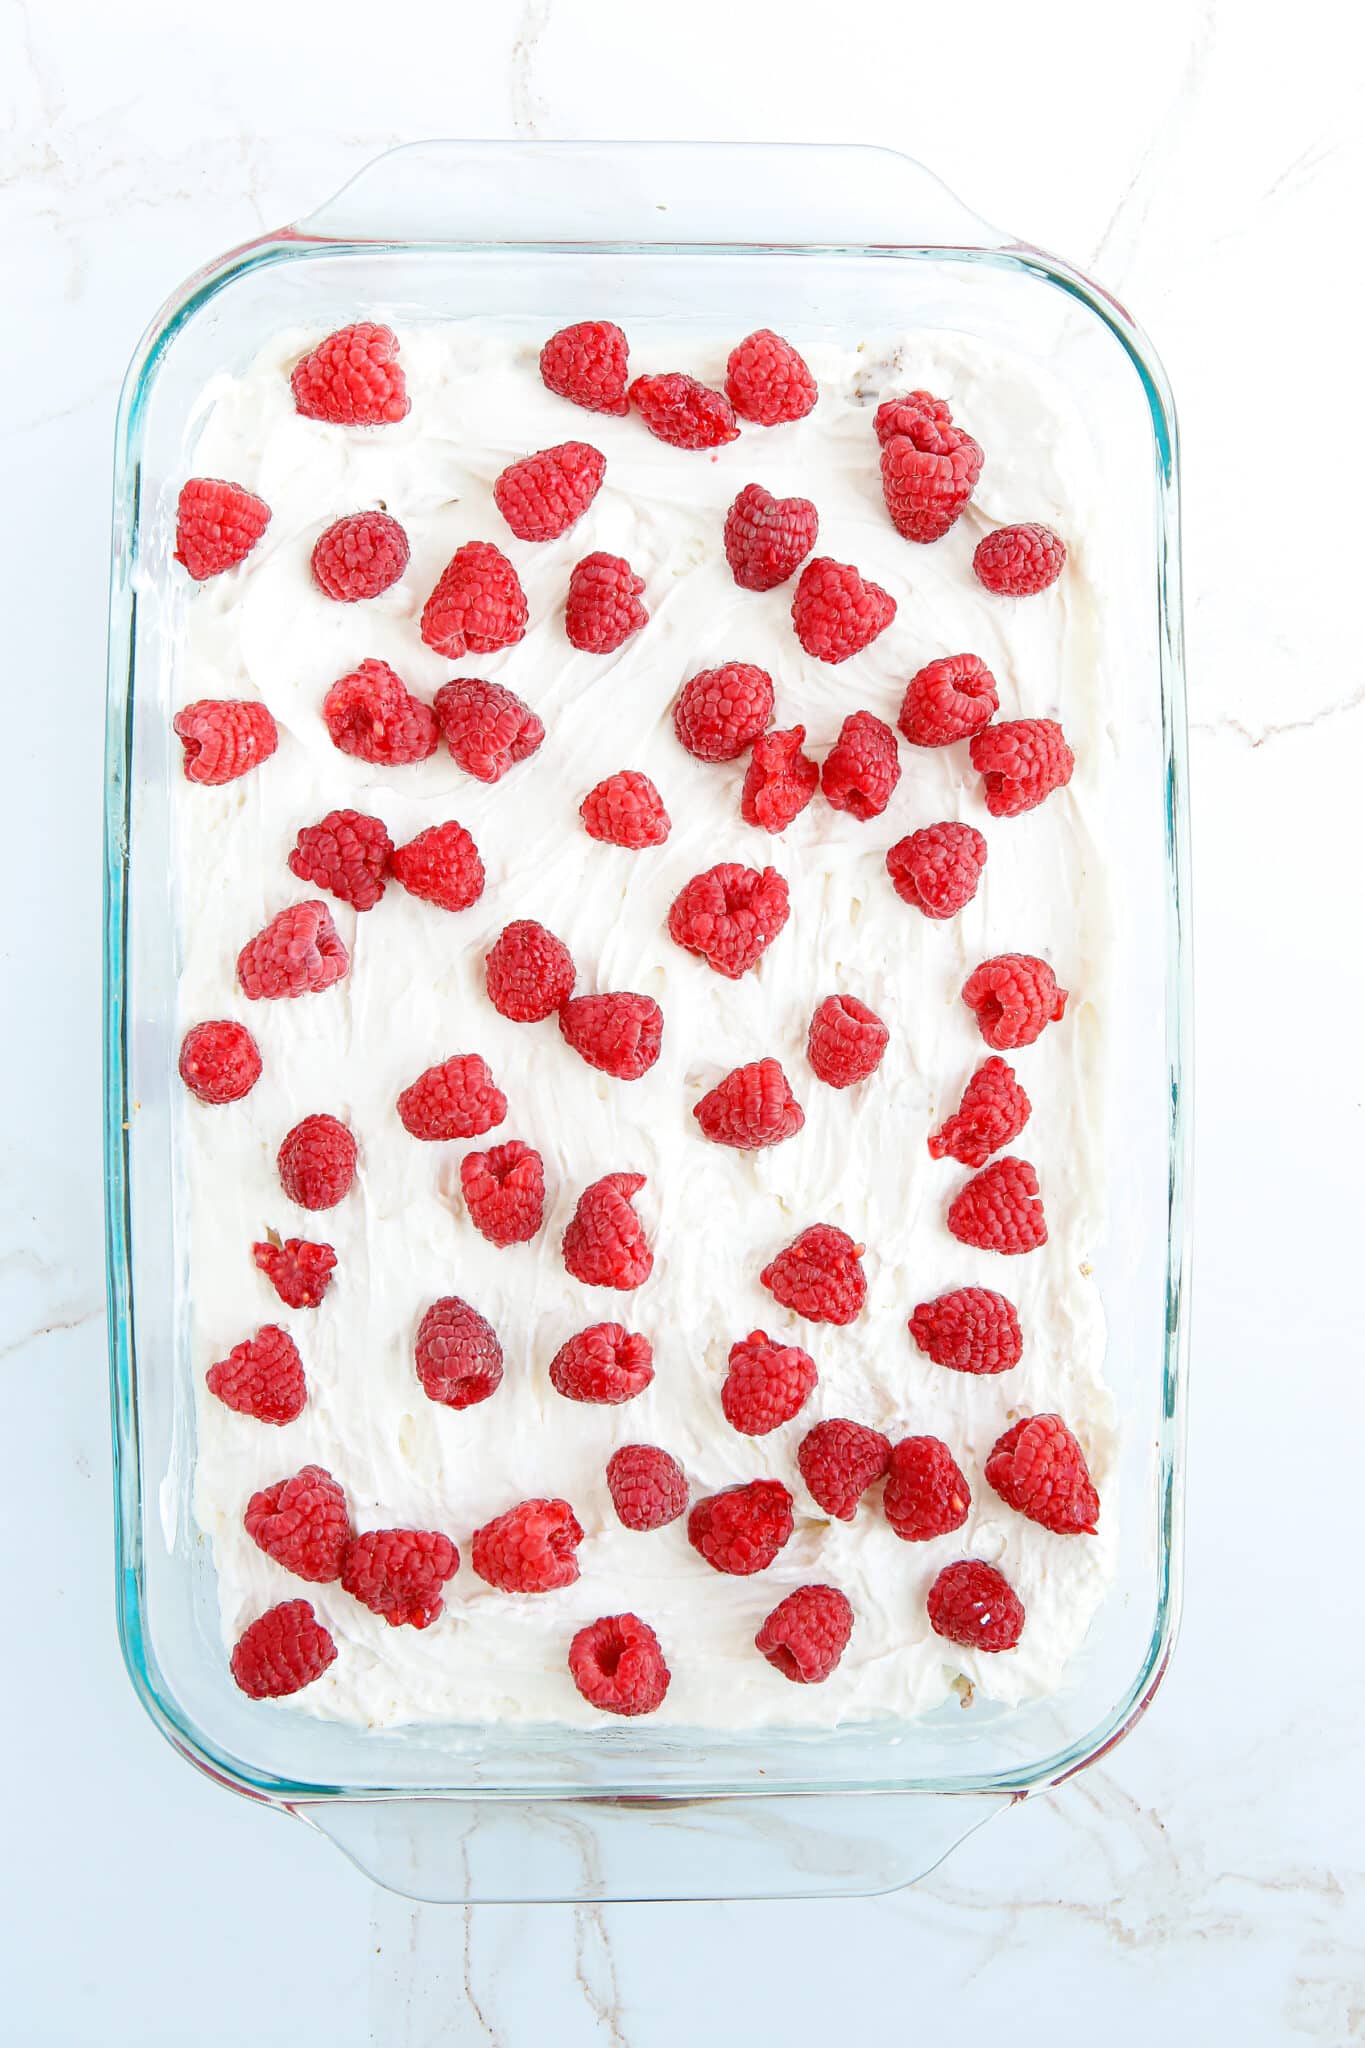 Adding the fresh raspberries on top.